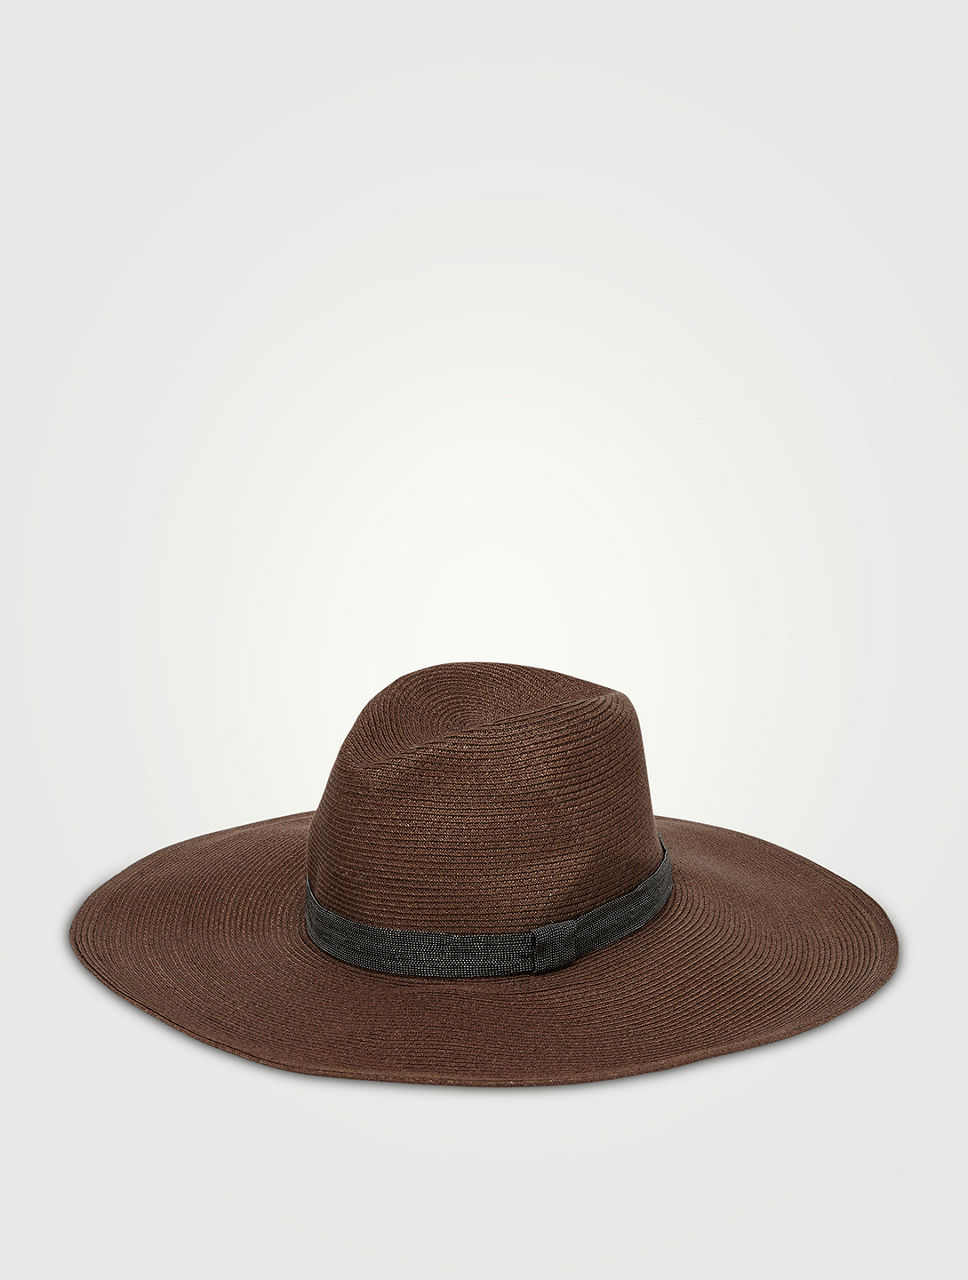 Roger Vivier Street Style Bucket Hats Wide-brimmed Hats, Black, S